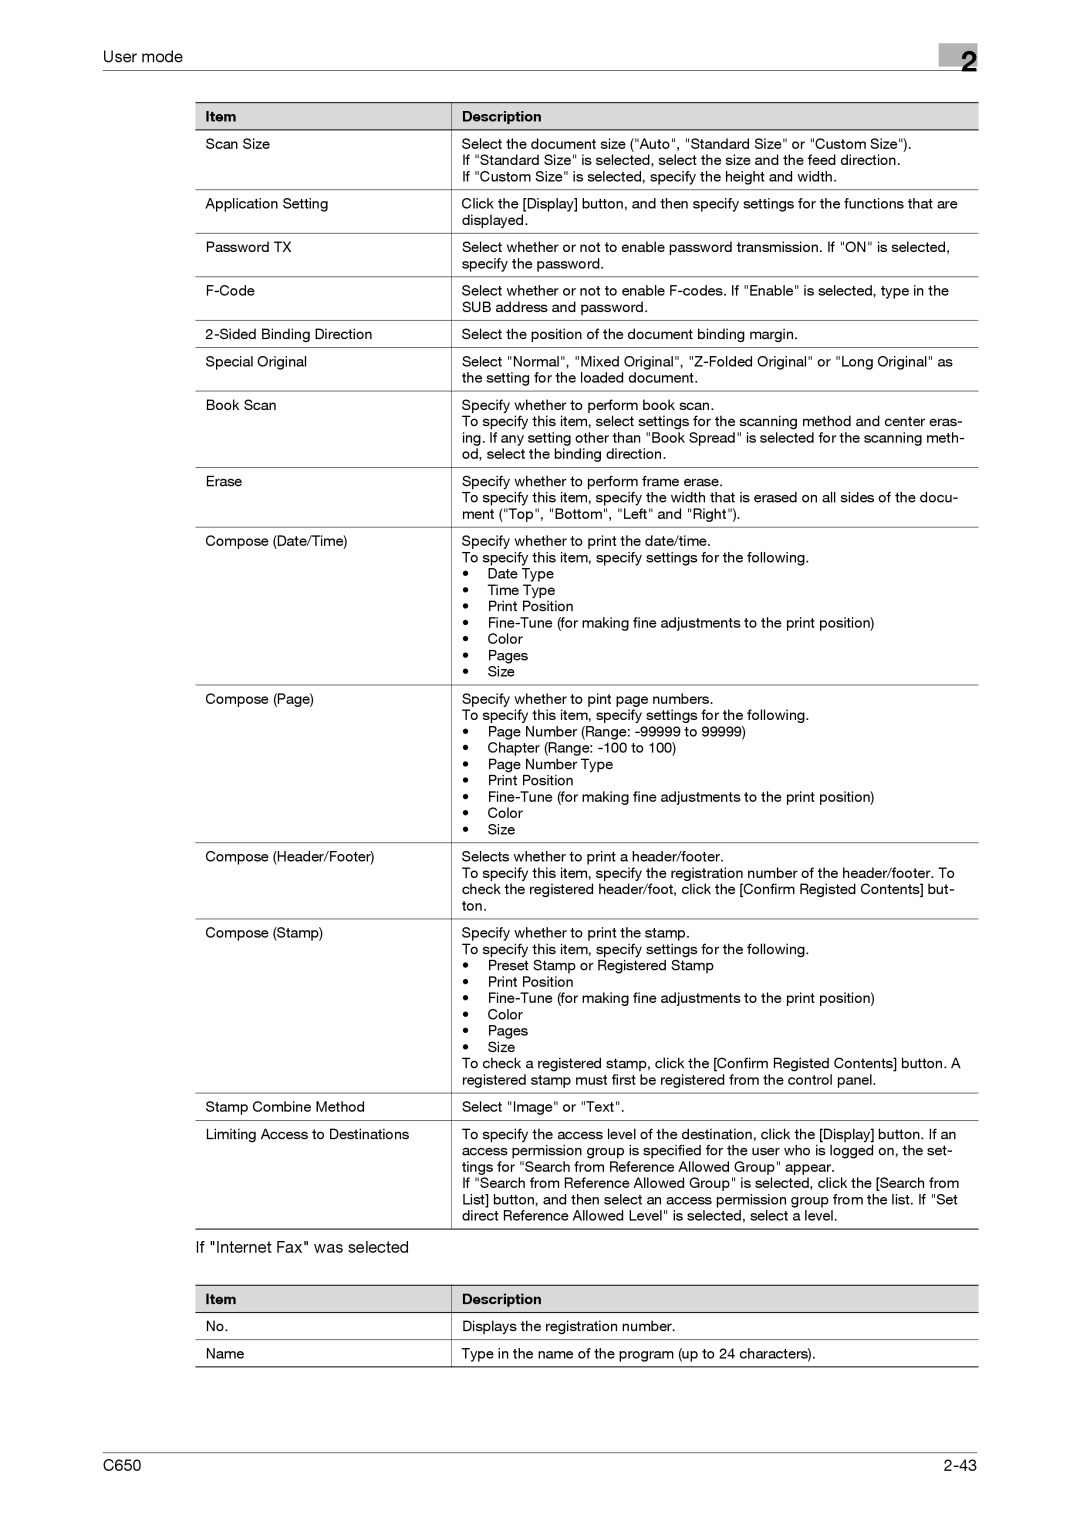 Konica Minolta C650 manual If Internet Fax was selected, 2-43, User mode, Item, Description 